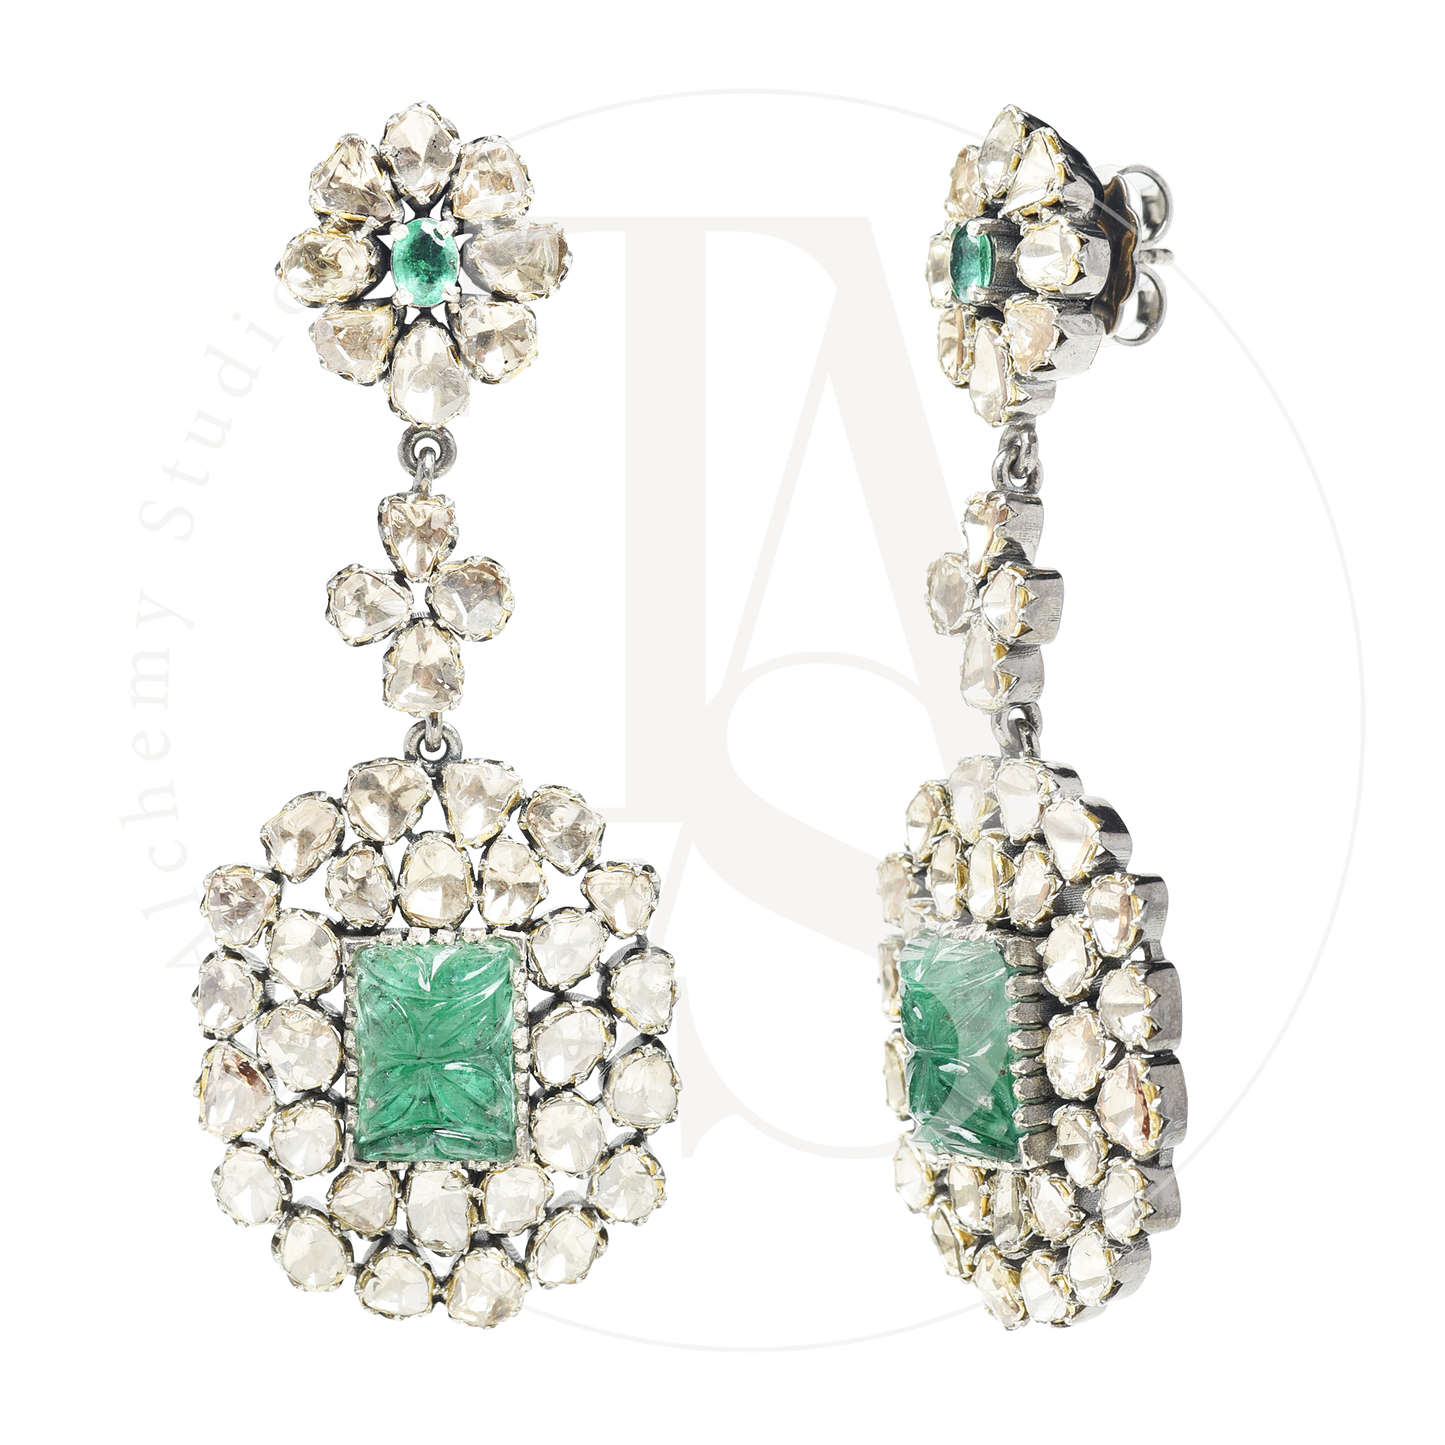 Empress Emerald and Uncut Diamond Earrings